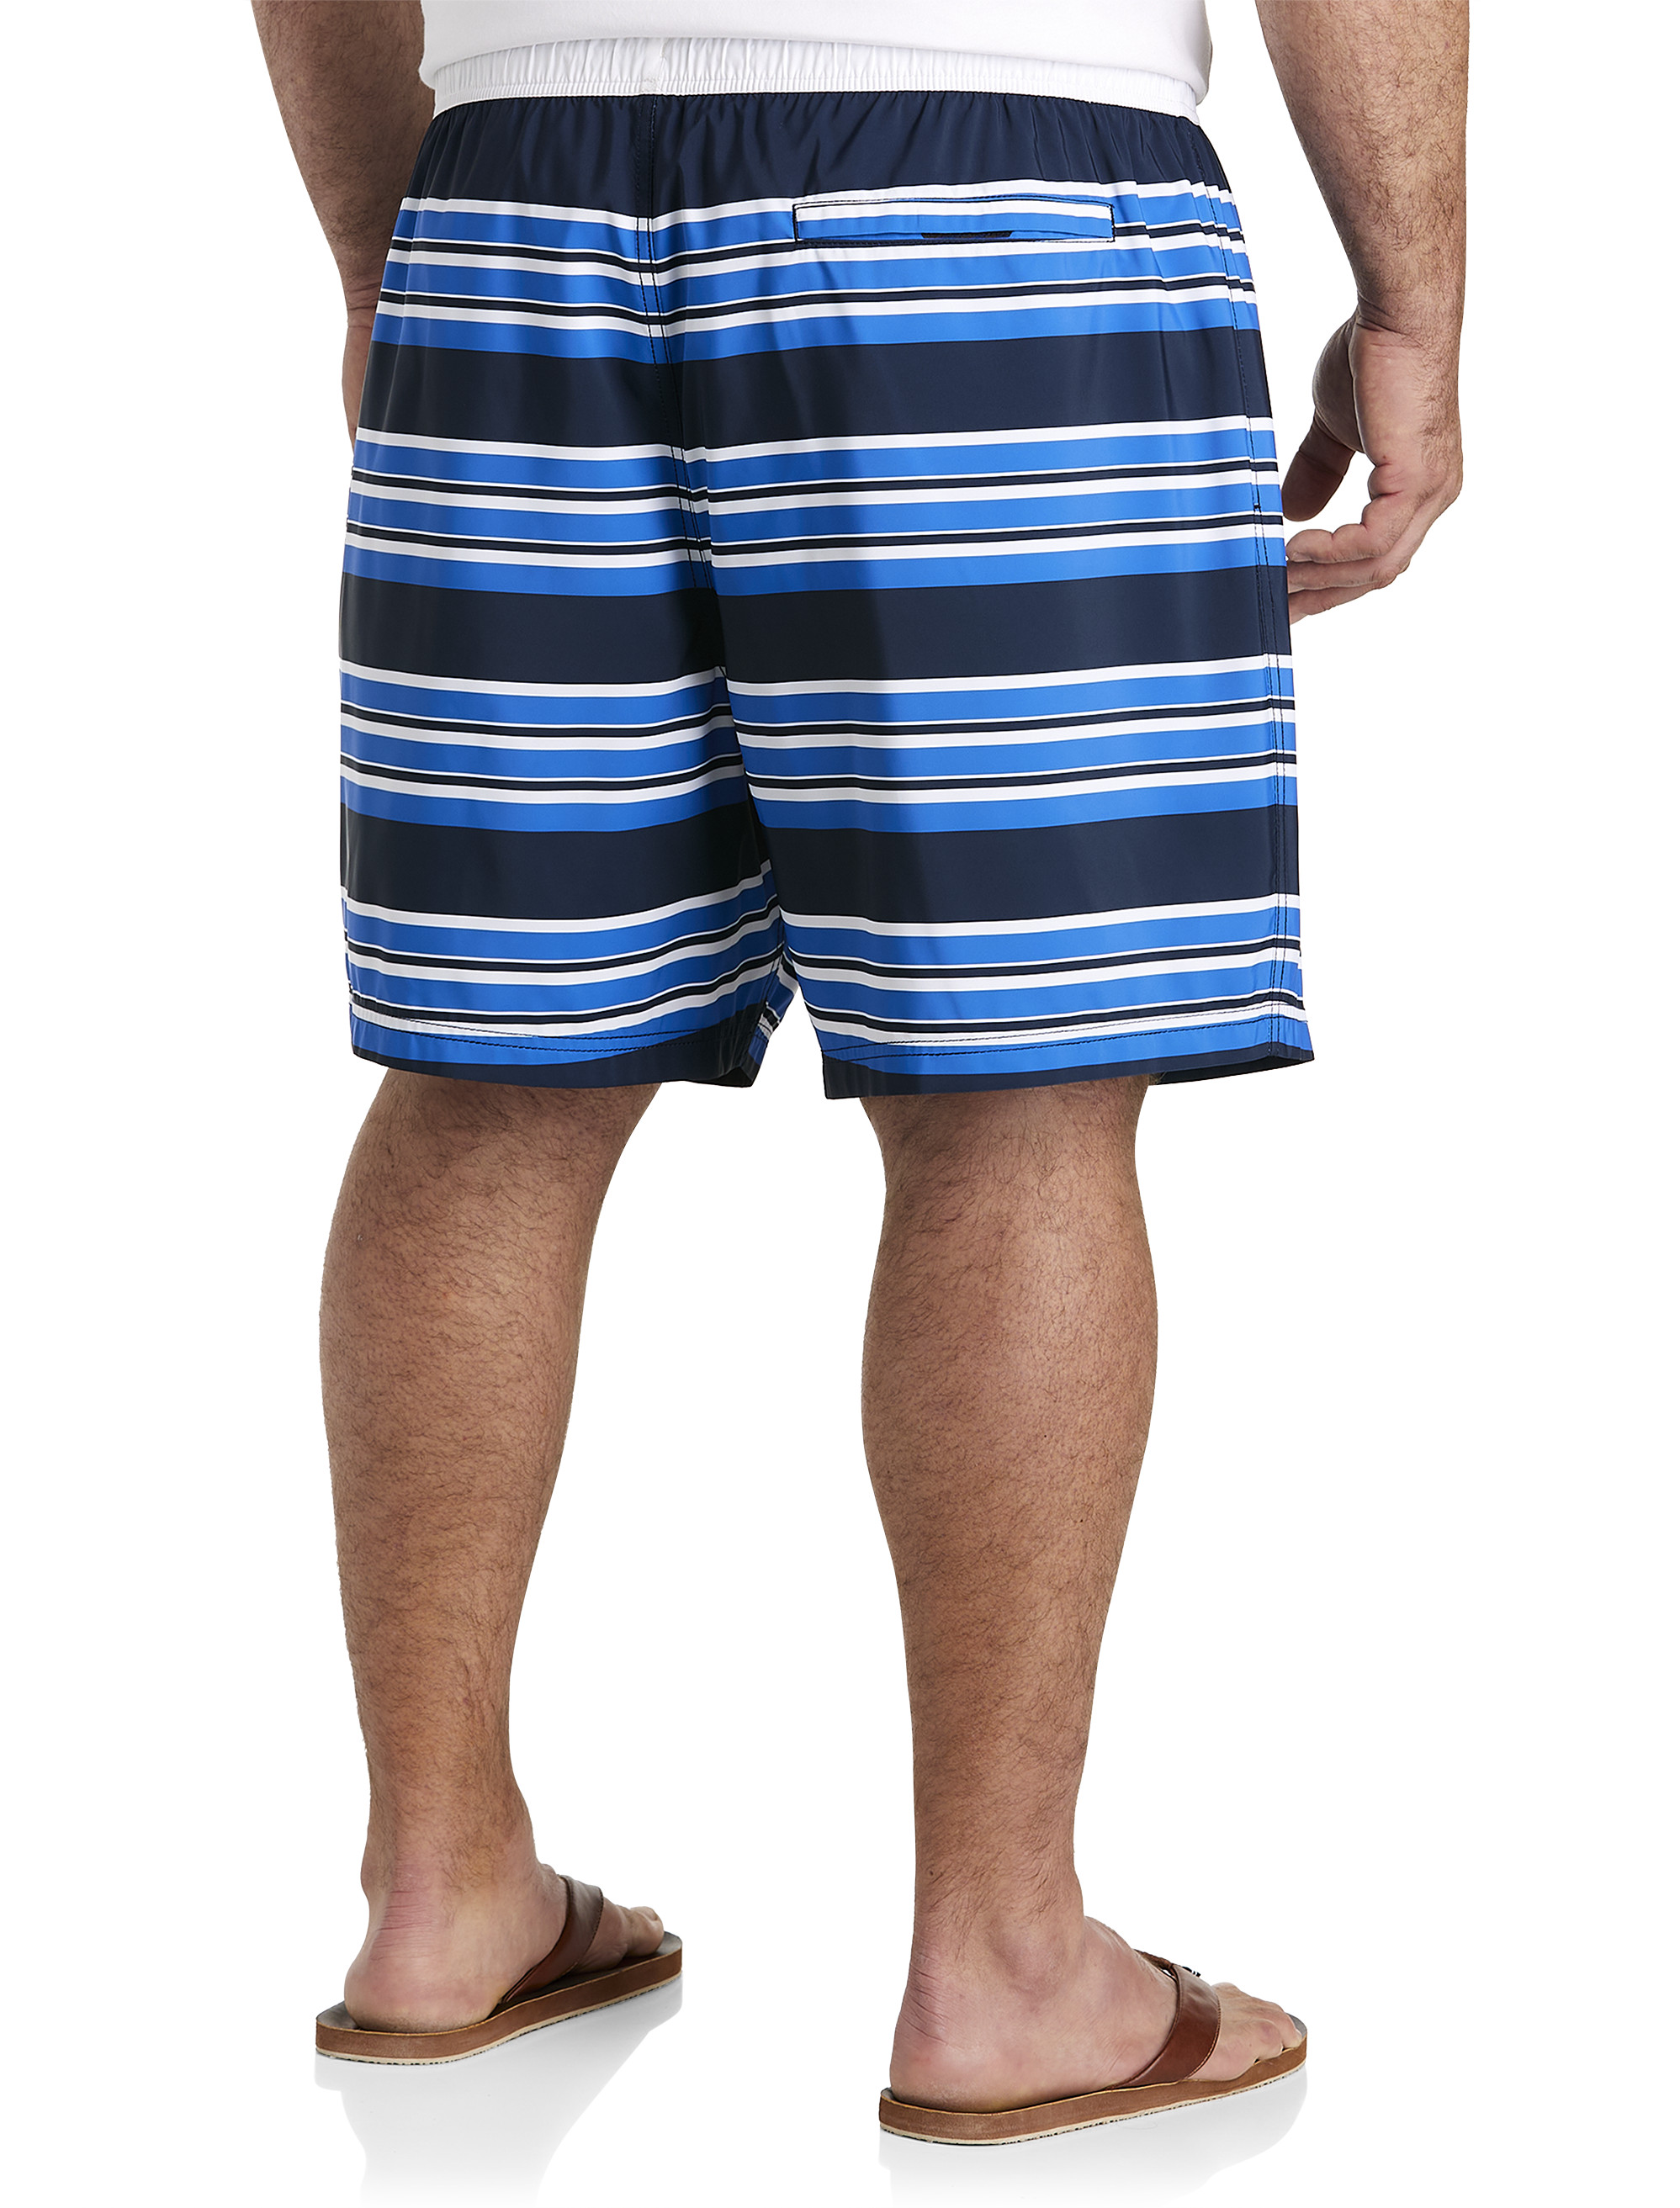 Men's Pretzel Cookie Swim Trunks Quick Dry Swim Shorts Casual Beach Board  Shorts Swimwear S-3XL 